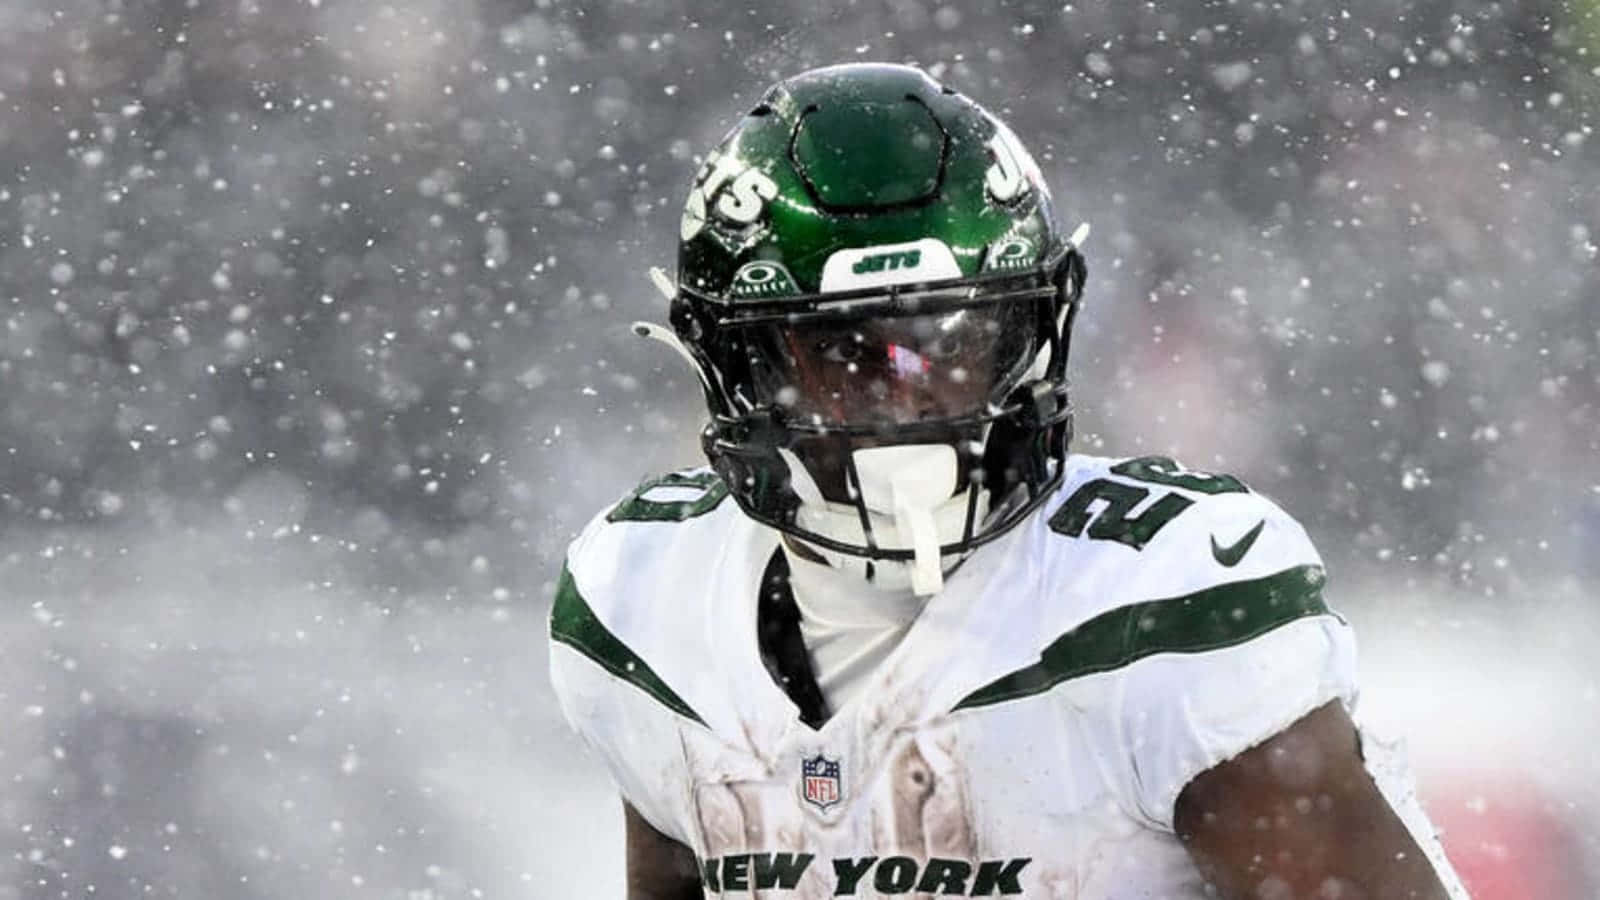 New York Jets Playerin Snowy Weather Wallpaper